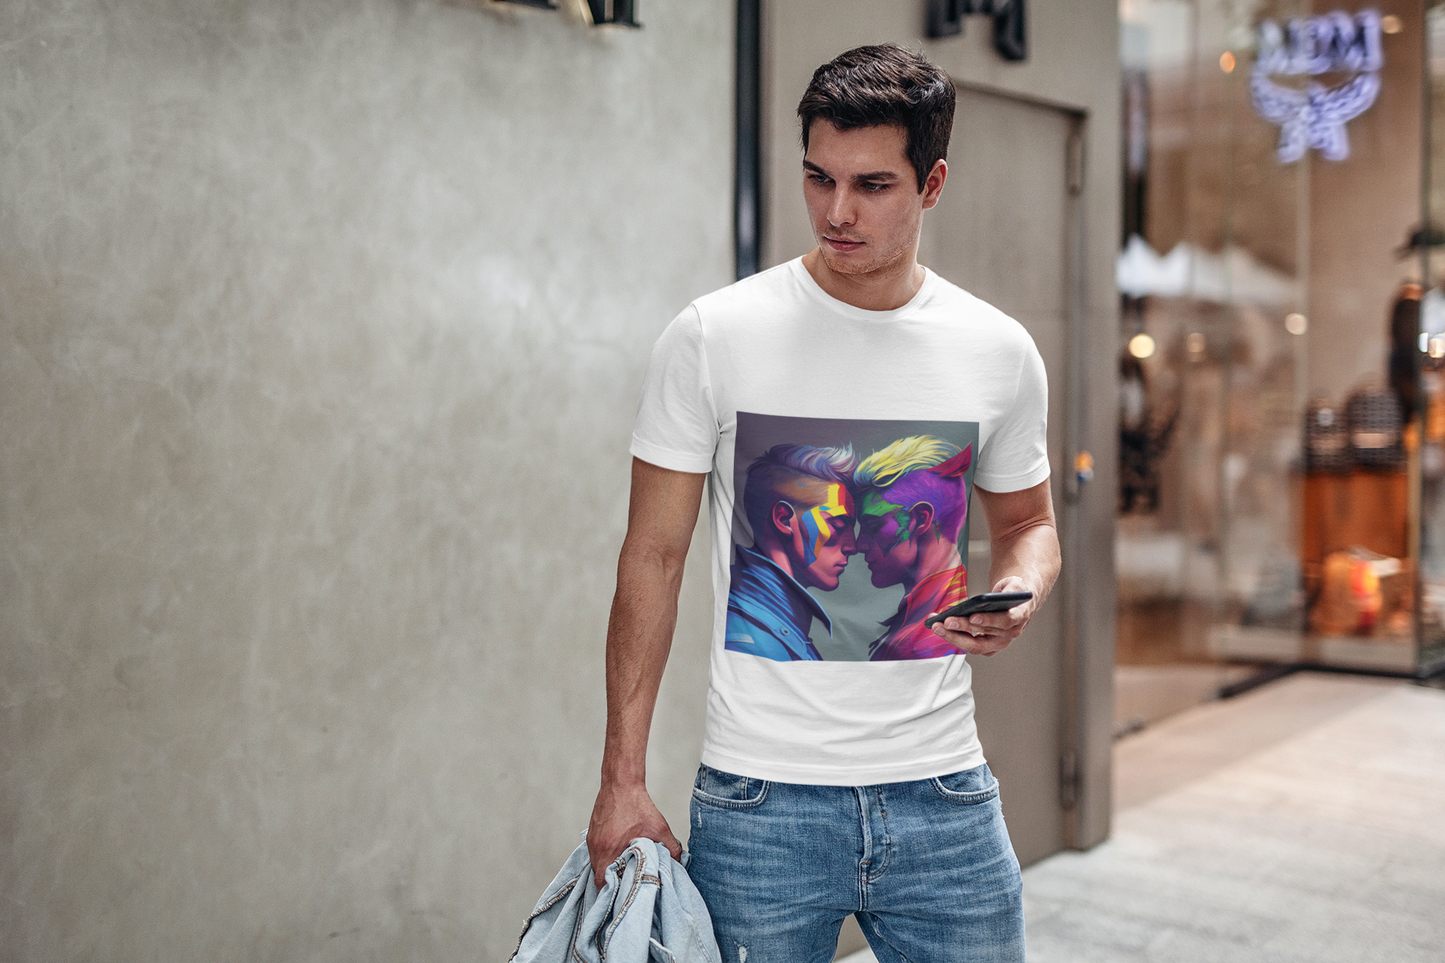 MUS Exclusive Design T-Shirt Two Pride Men